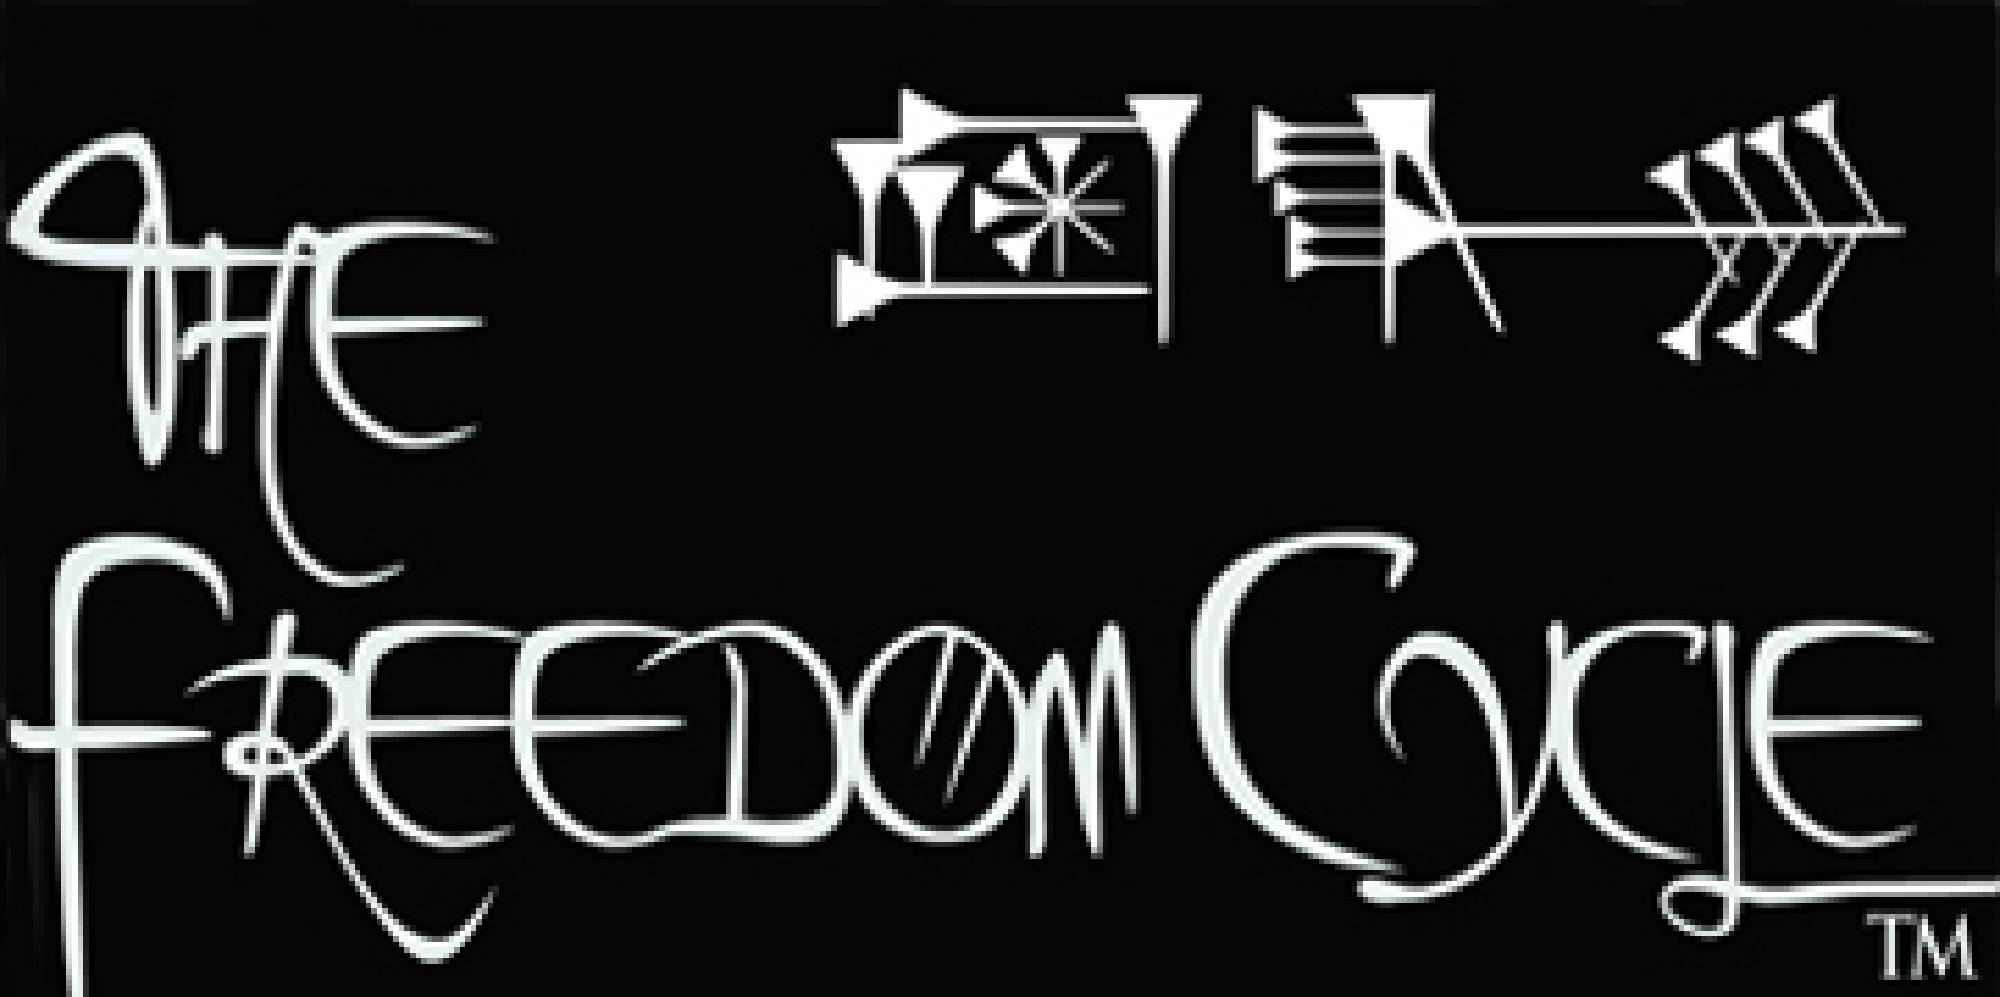 freedom cycle inc